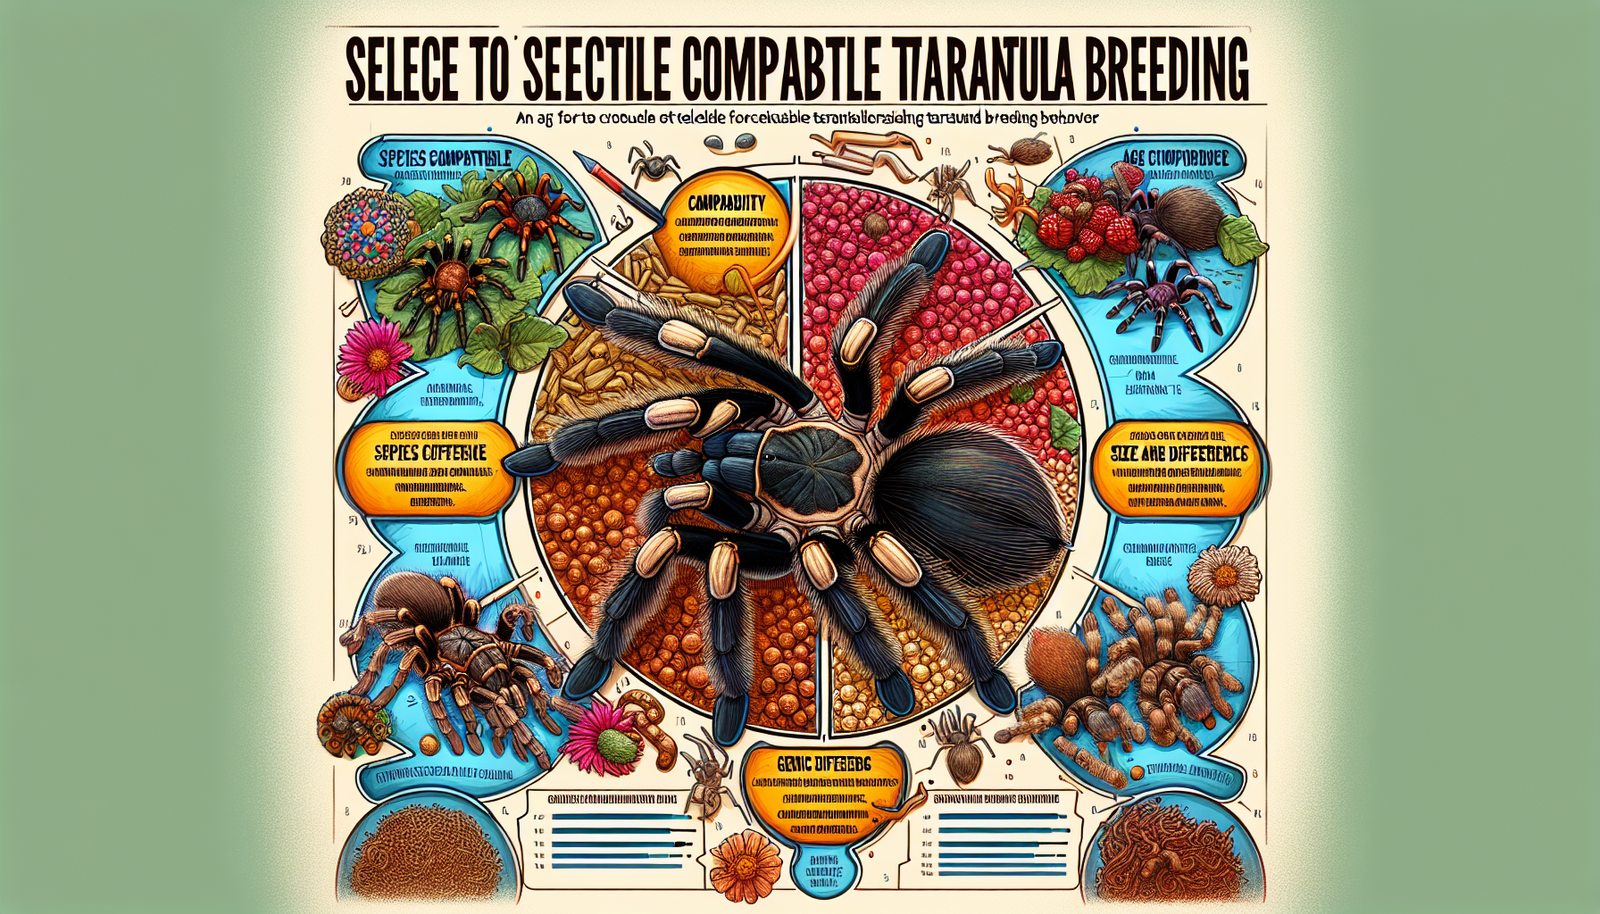 How Do I Choose Compatible Tarantulas For Breeding?